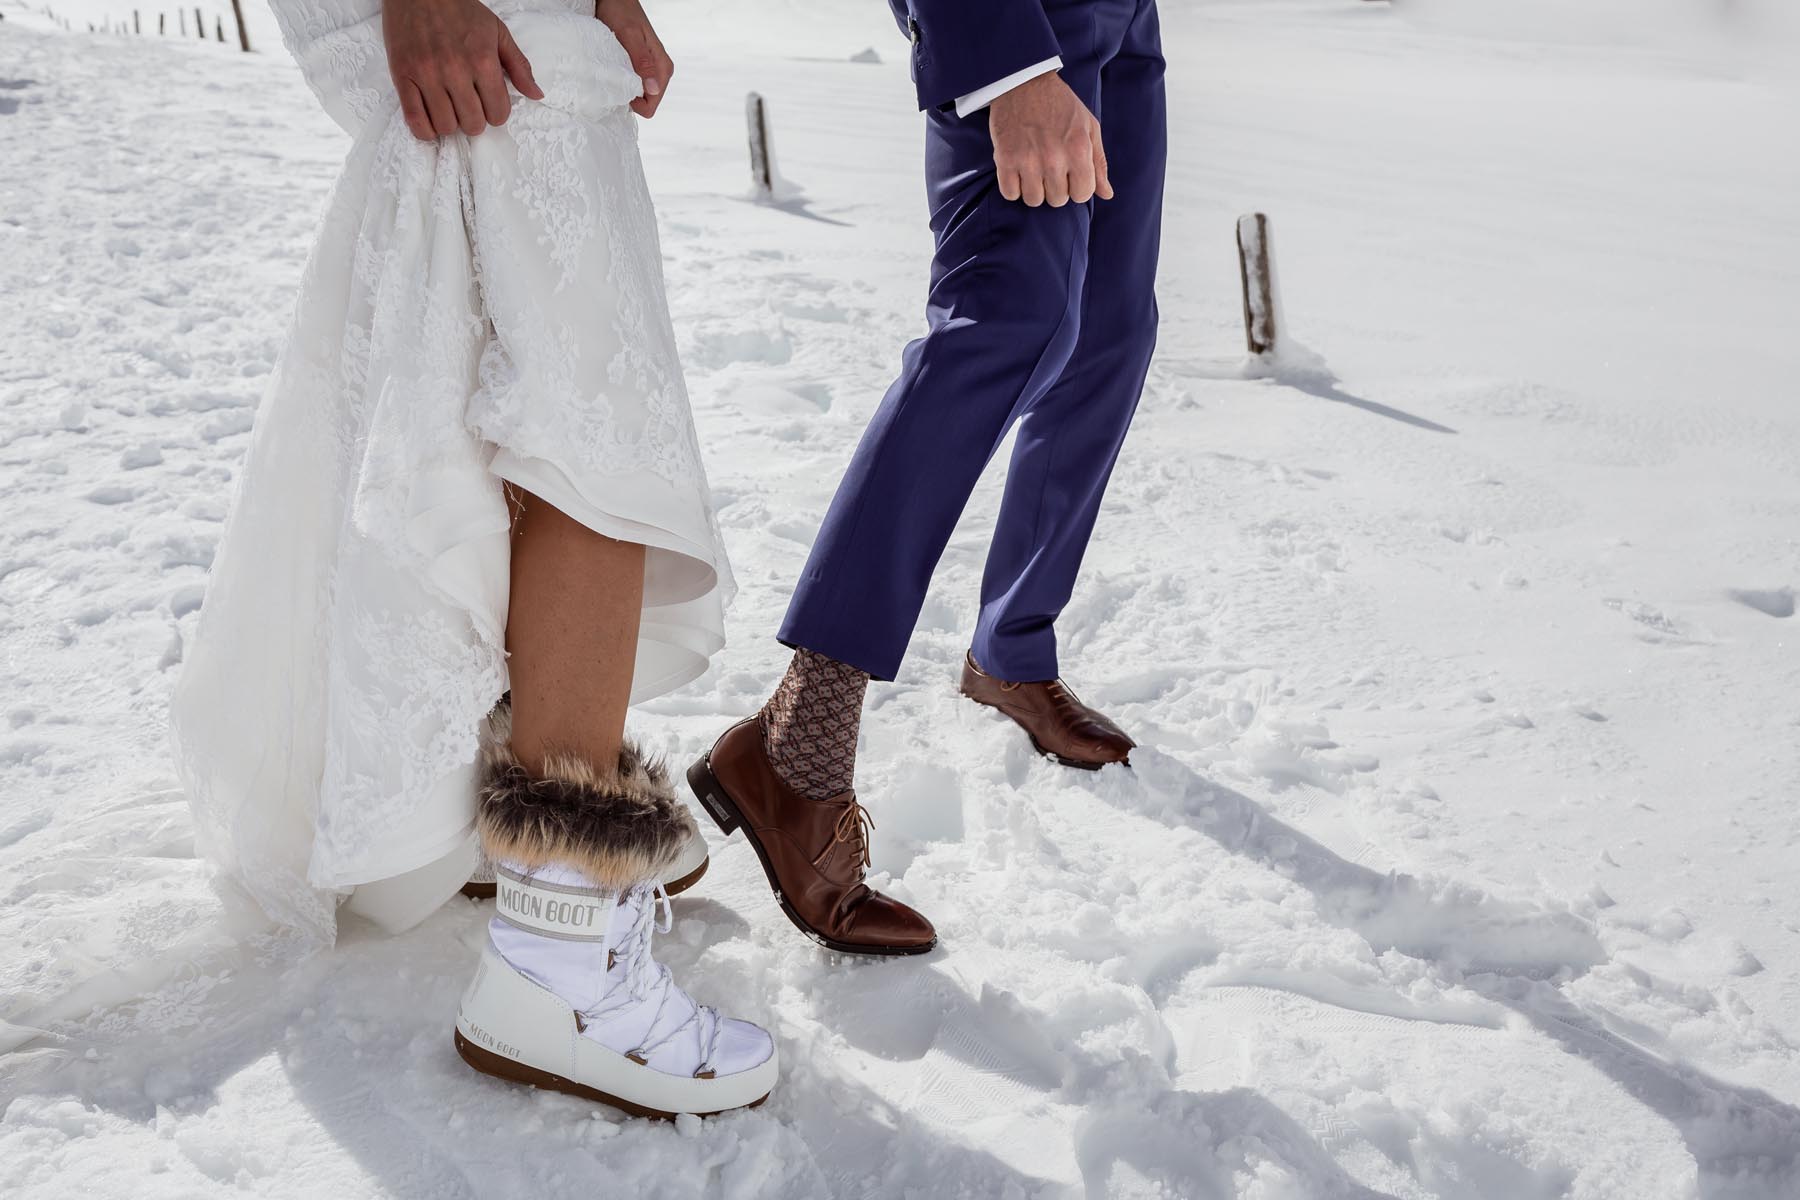 Mariage à la montagne thème ski papeterie mariage ski